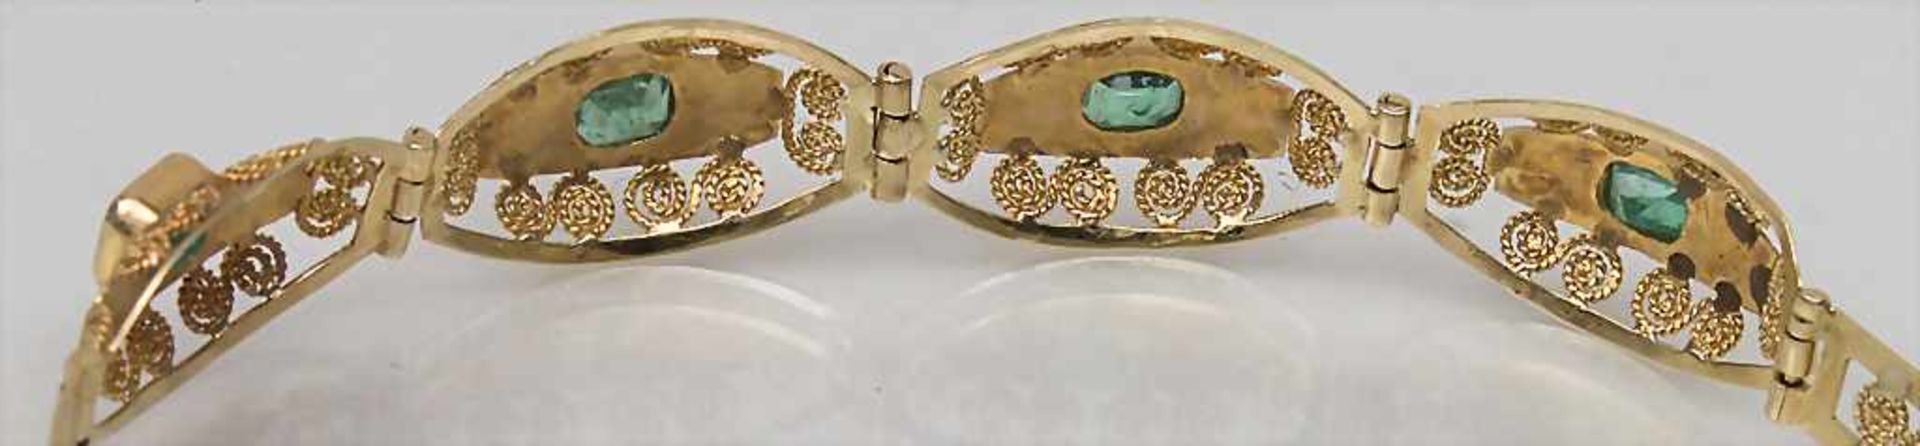 Goldarmband mit Smaragden / An 18k. gold bracelet with emaralds - Bild 3 aus 3